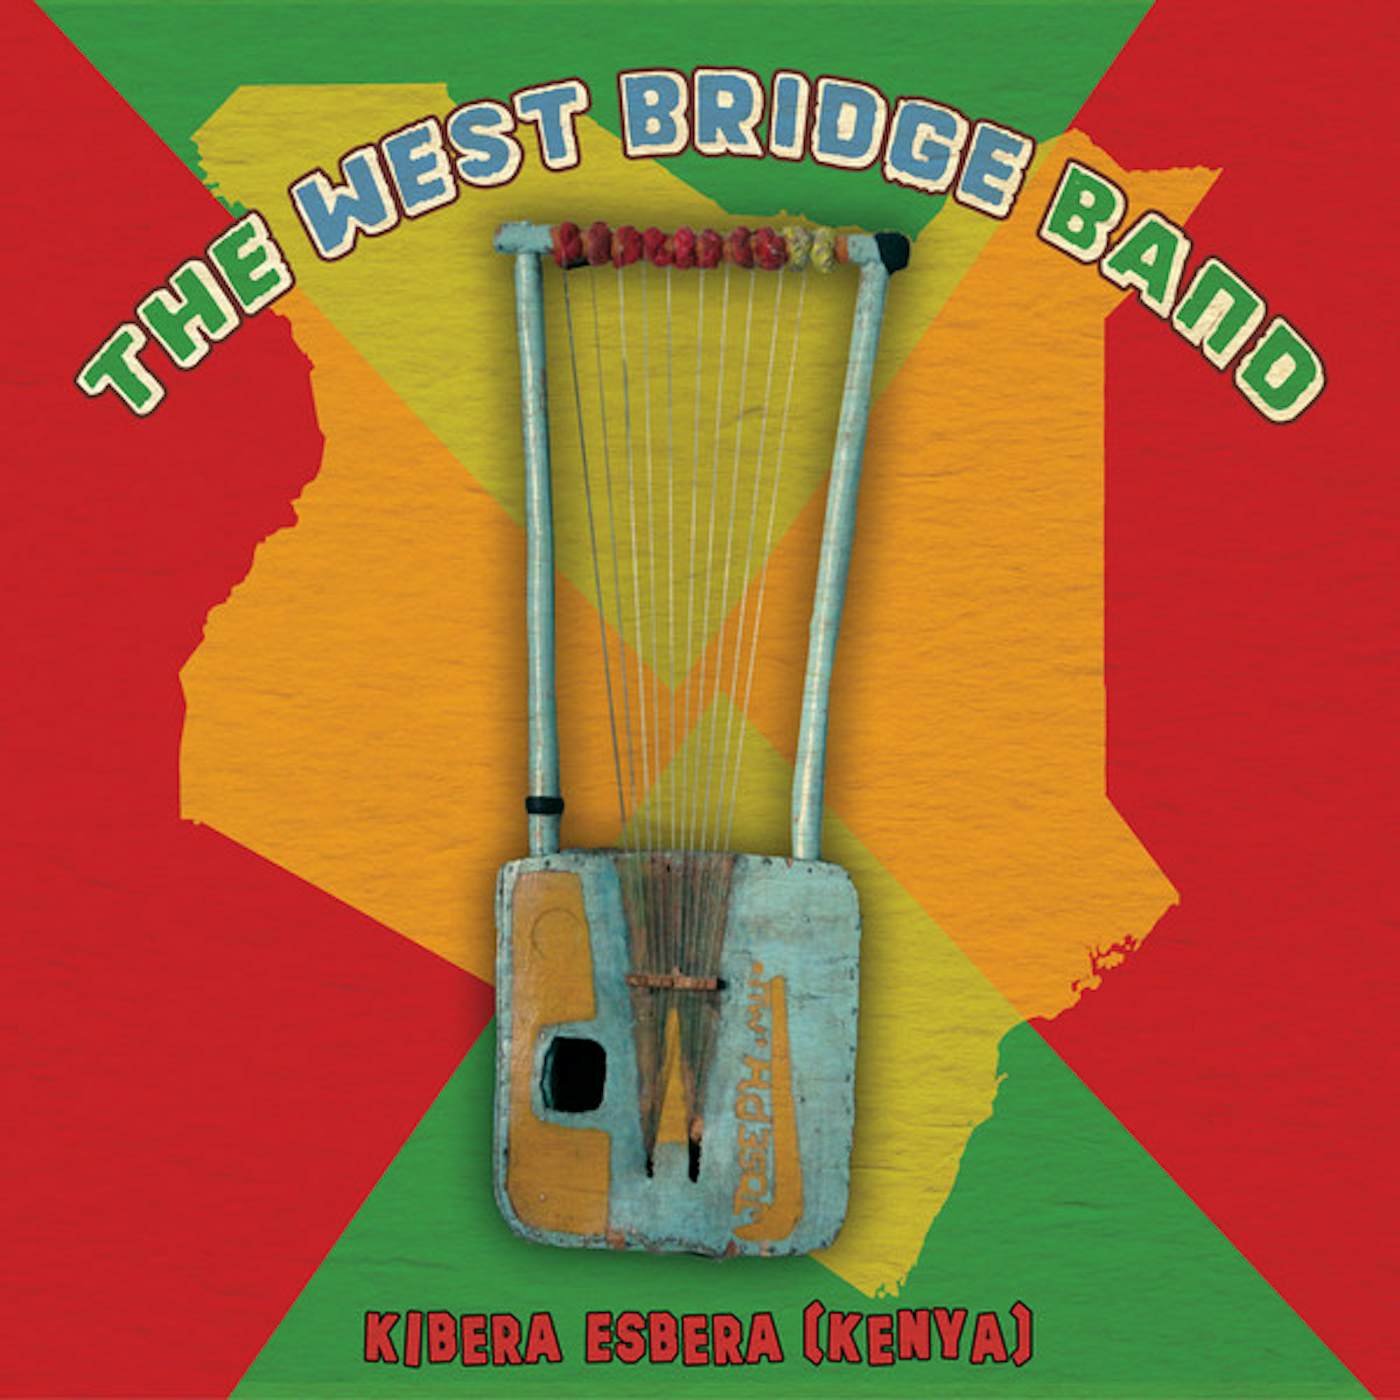 The West Bridge Band Kibera Esbera (Kenya) Vinyl Record